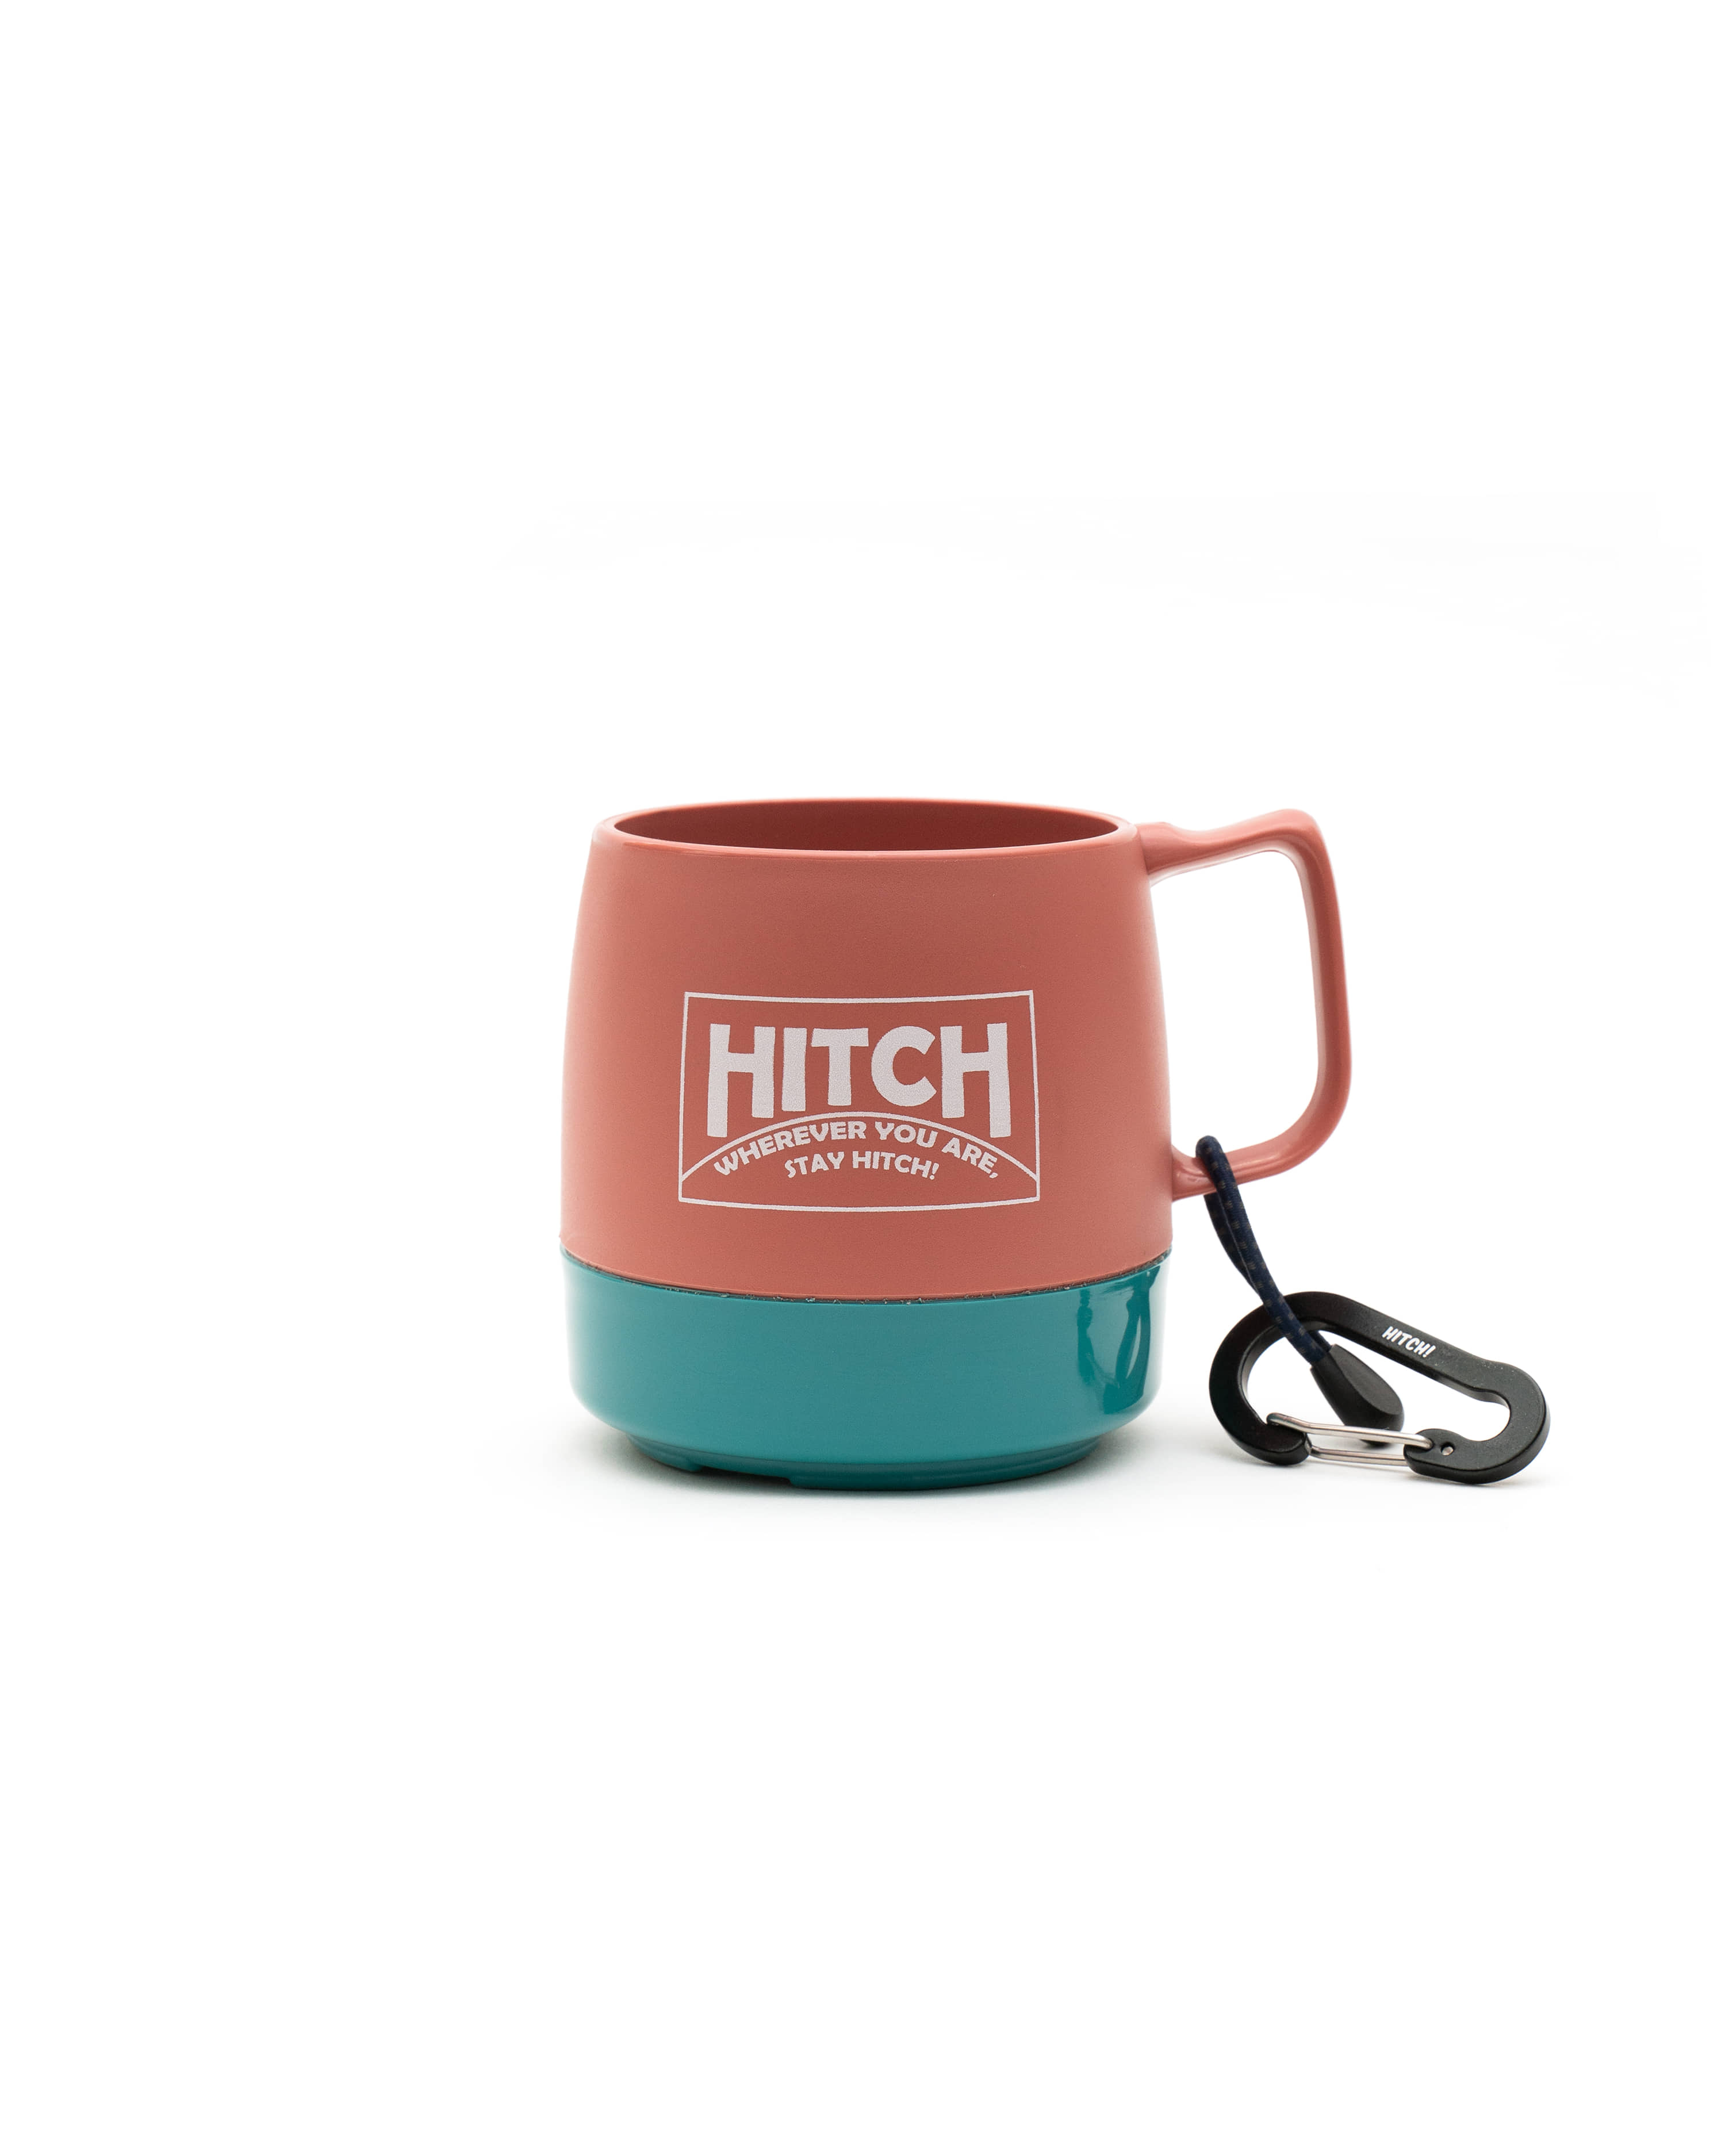 hitch x dinex 8oz mug - mauve/teal